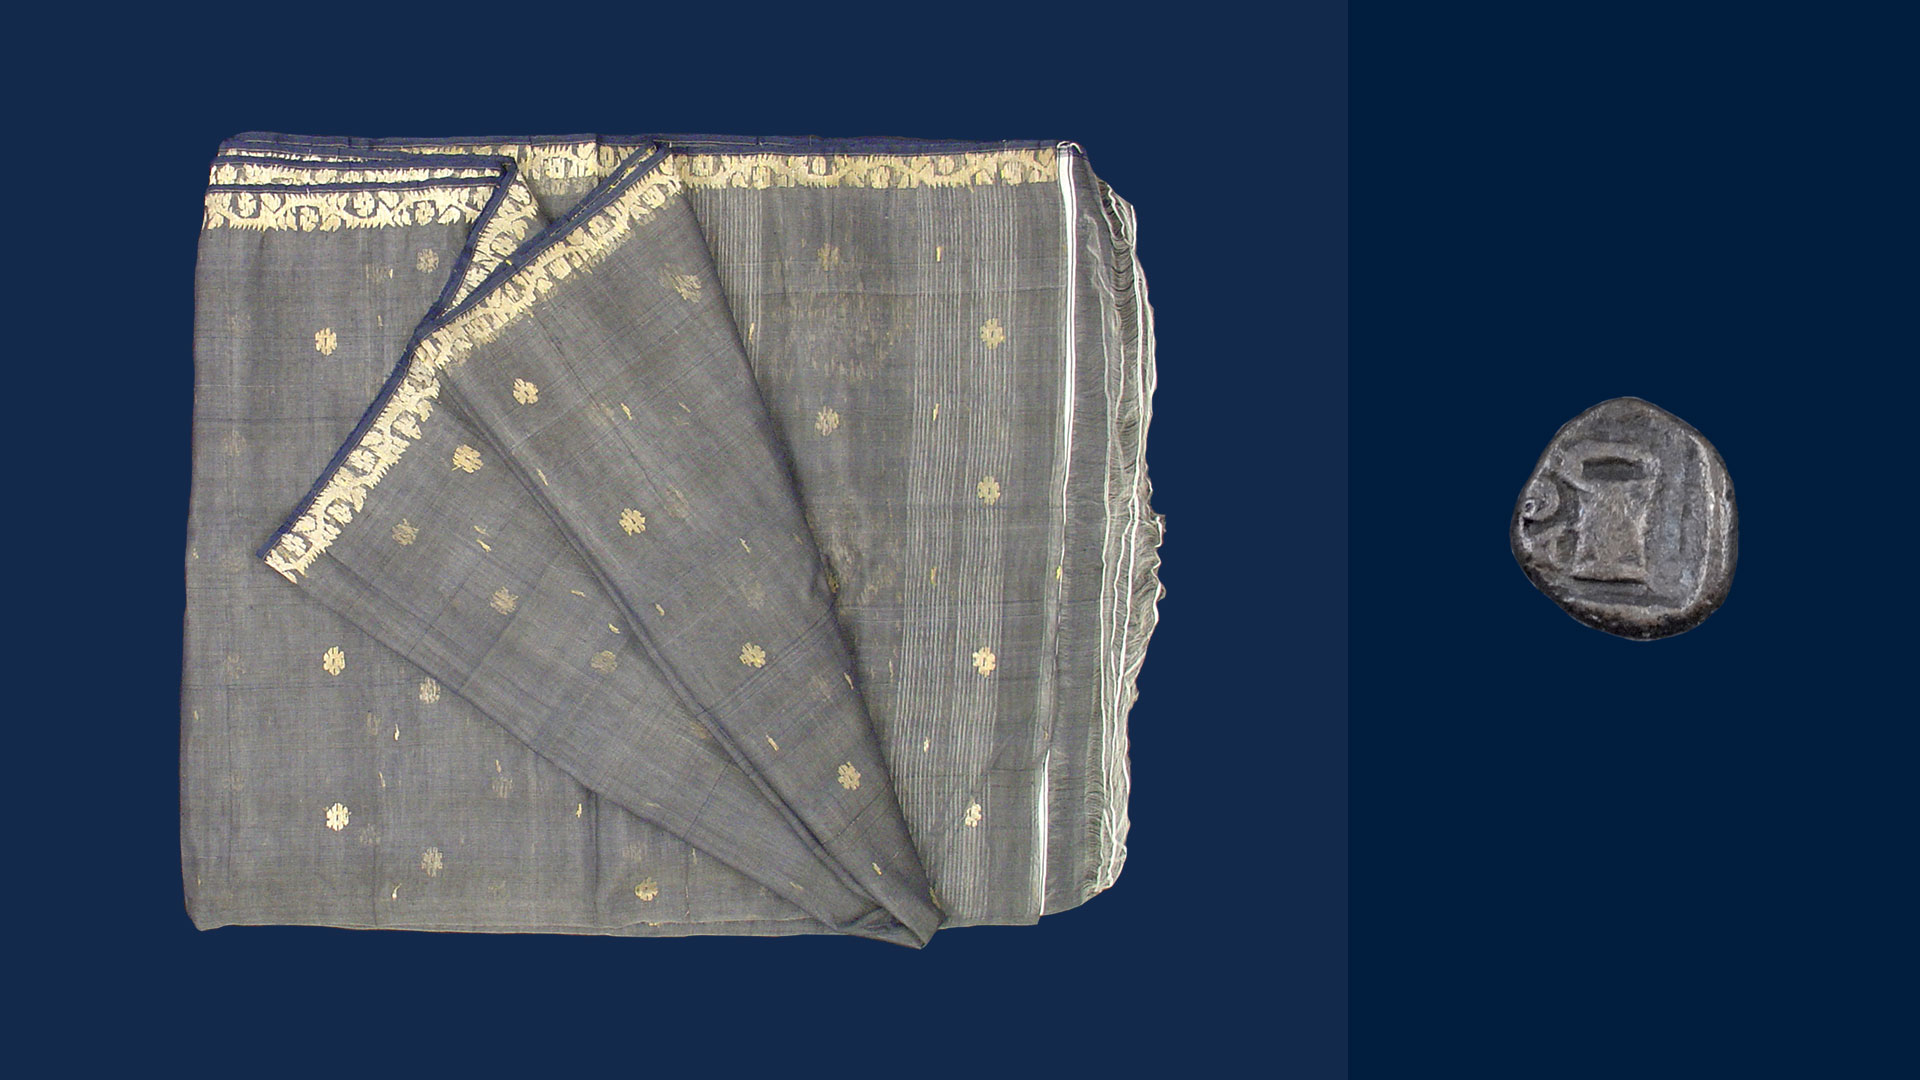 A greyish sari folded up next to a small gray coin